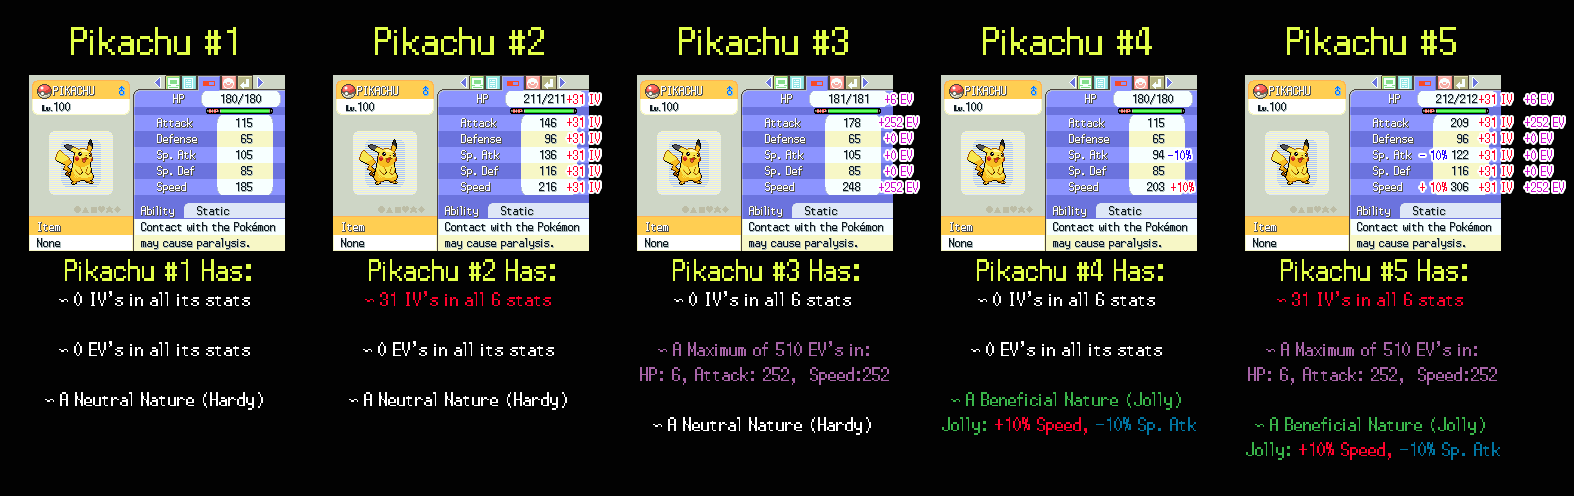 Summary Pokémon PokéOne - IVs, EVs, etc.